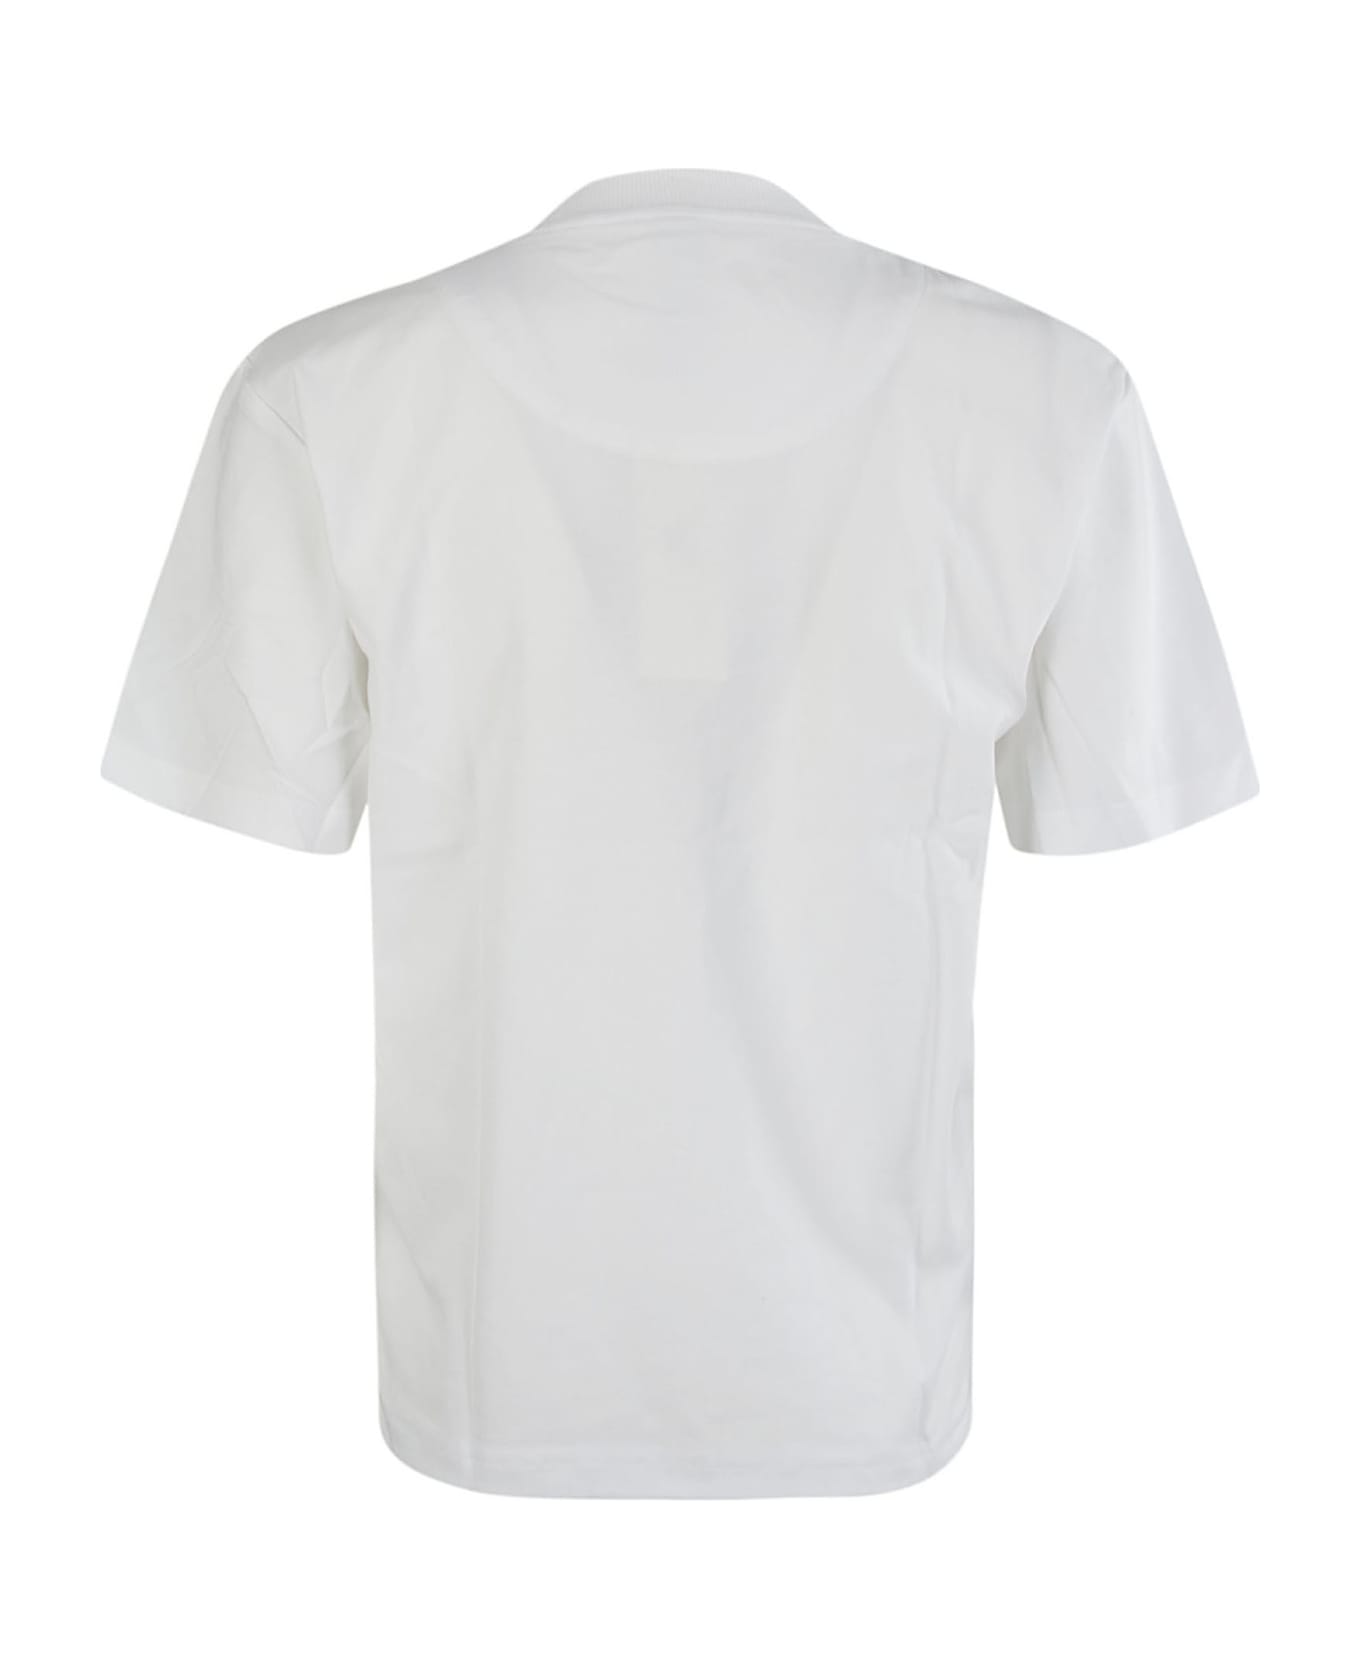 Adidas by Stella McCartney T-shirt Hr9167 - WHITE